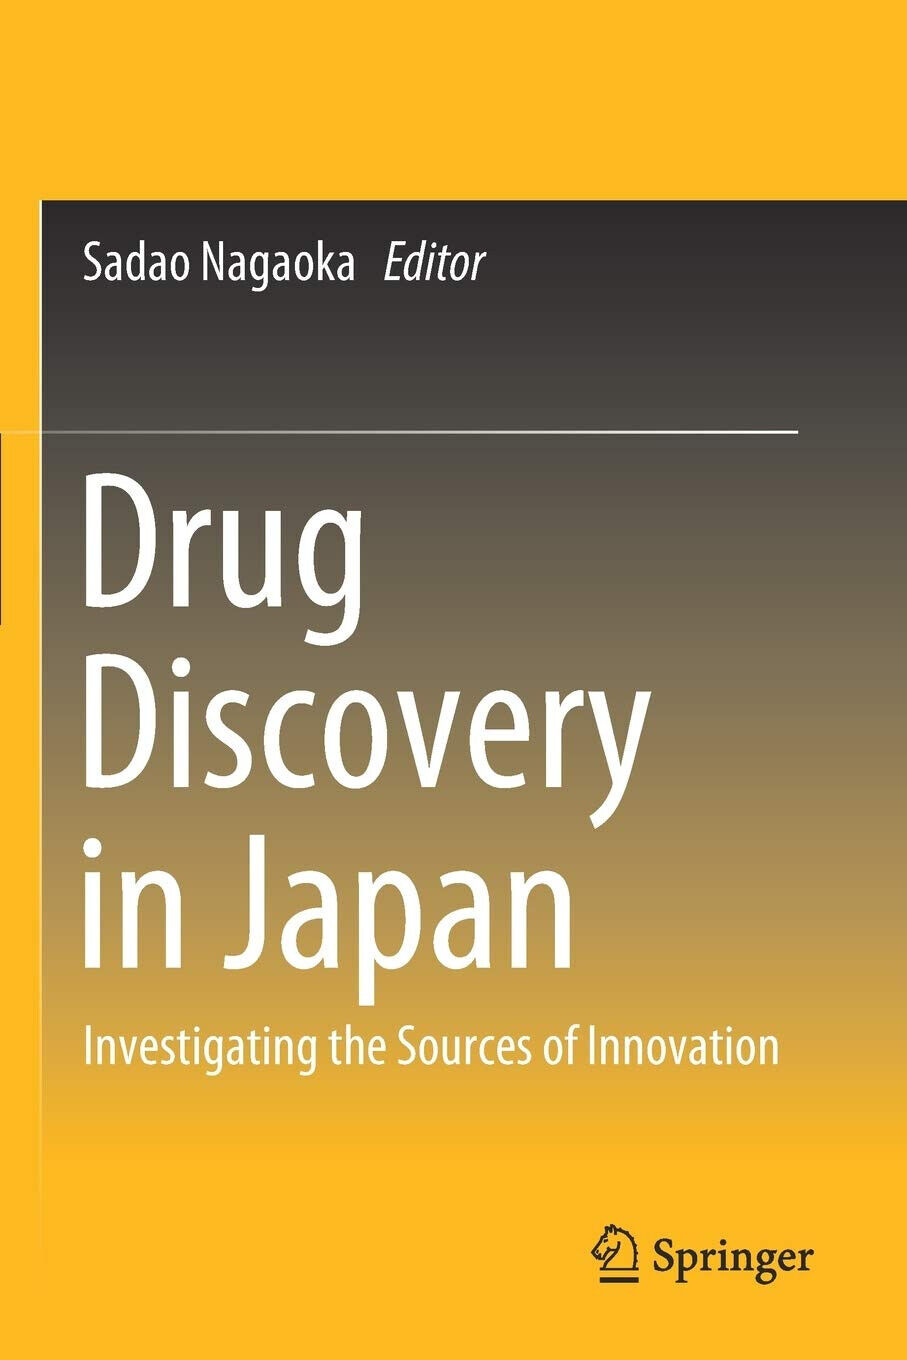 Drug Discovery in Japan - Sadao Nagaoka - Springer, 2020 libro usato